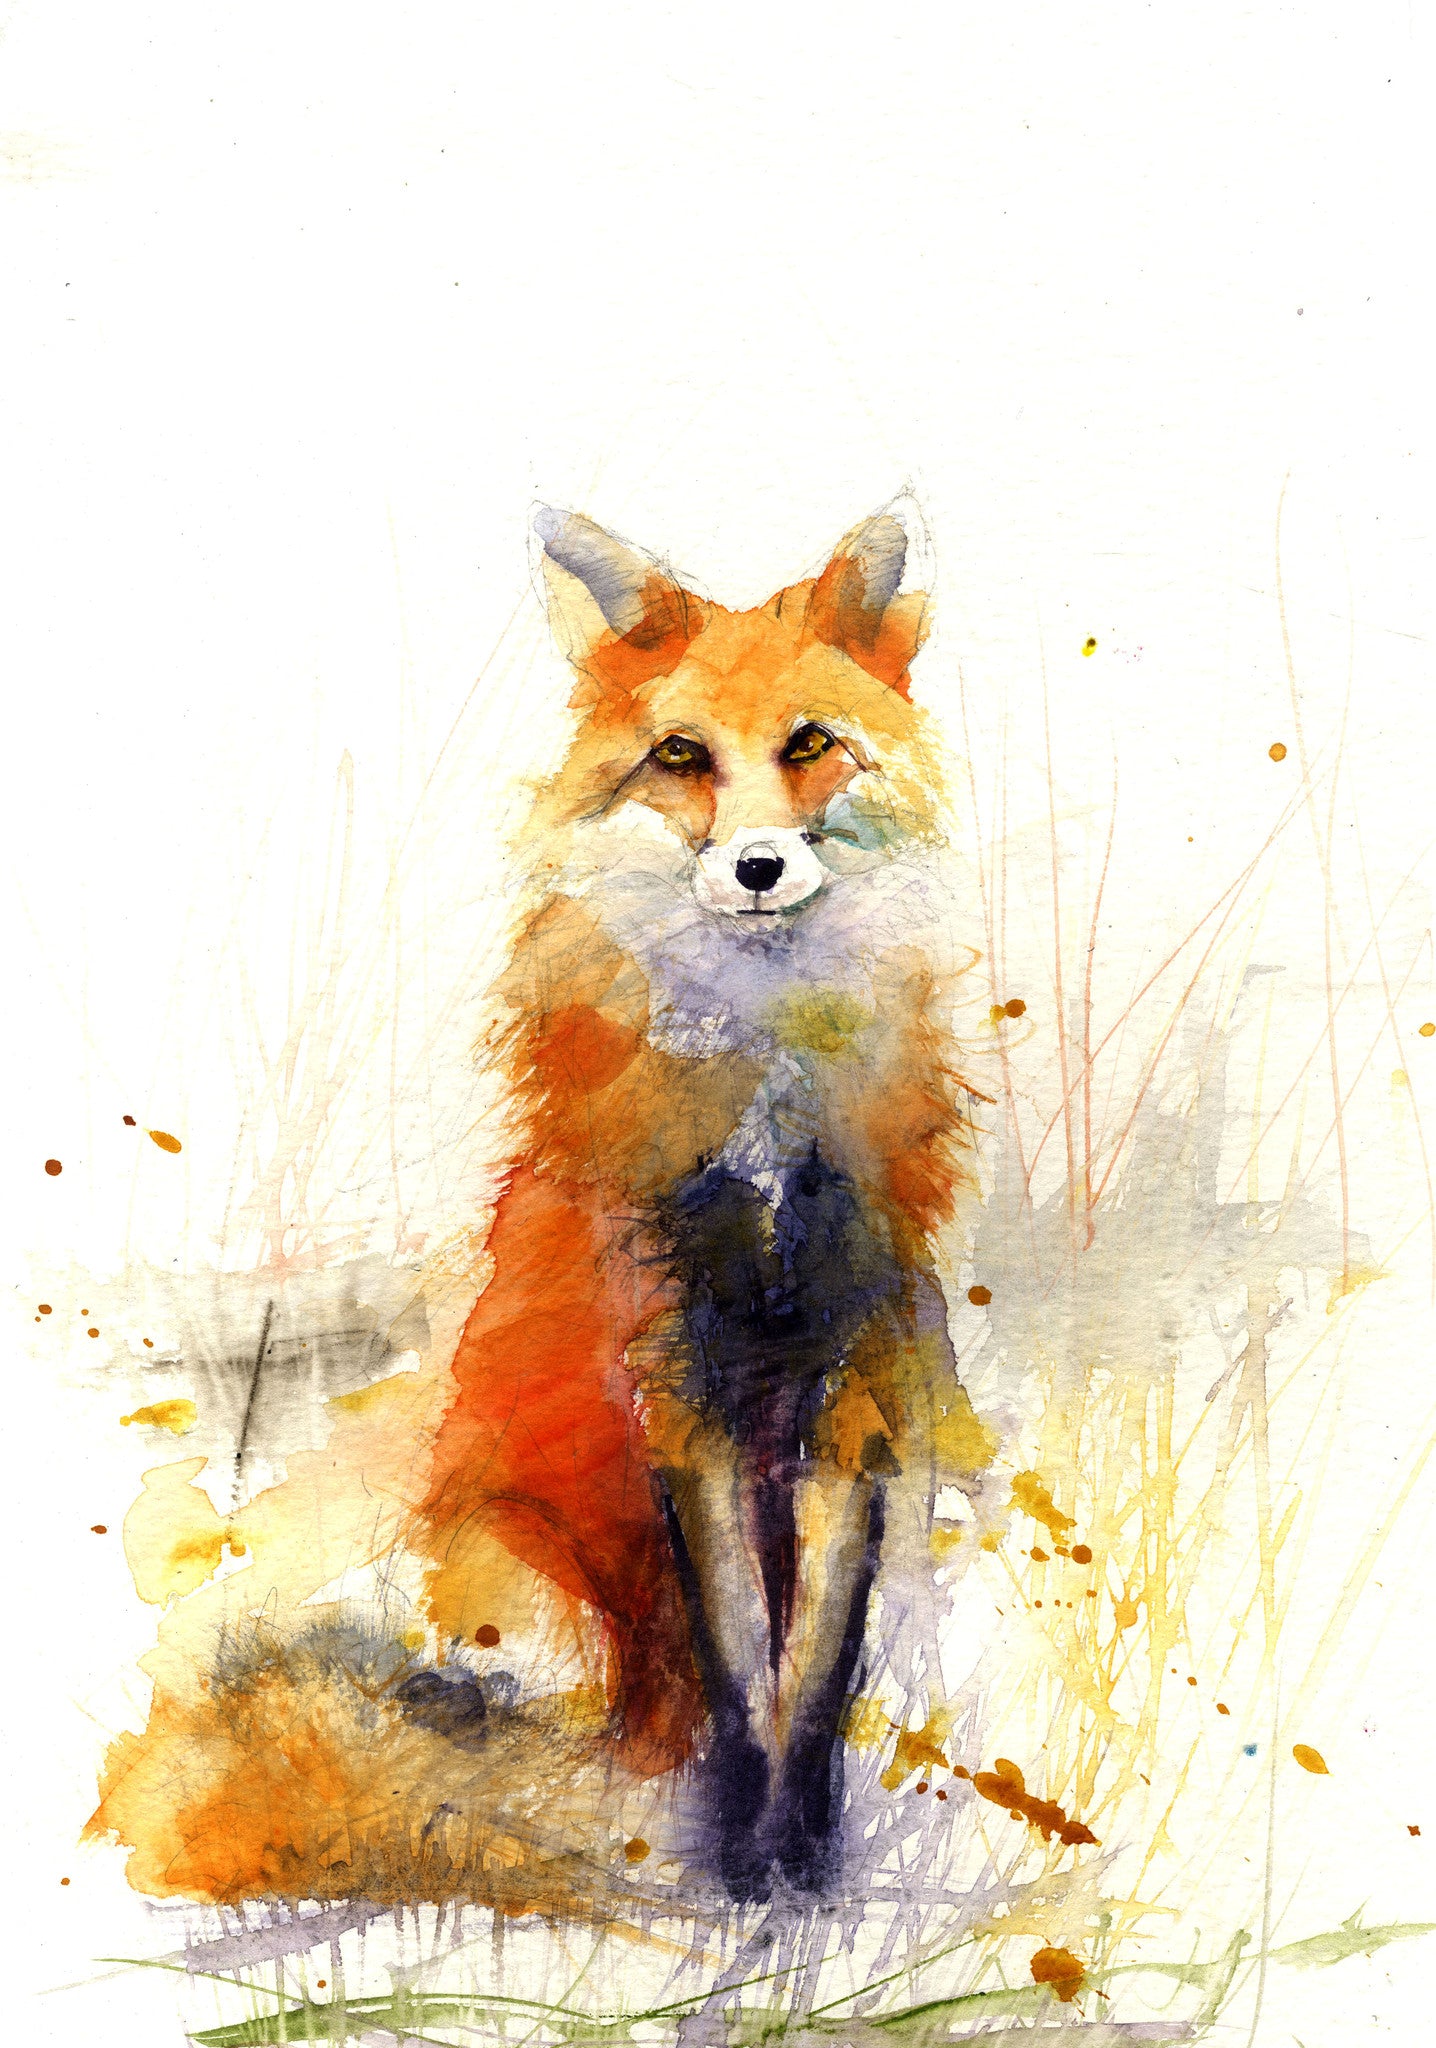 LIMITED EDITON PRINT of my original RED FOX - Jen Buckley Art limited edition animal art prints